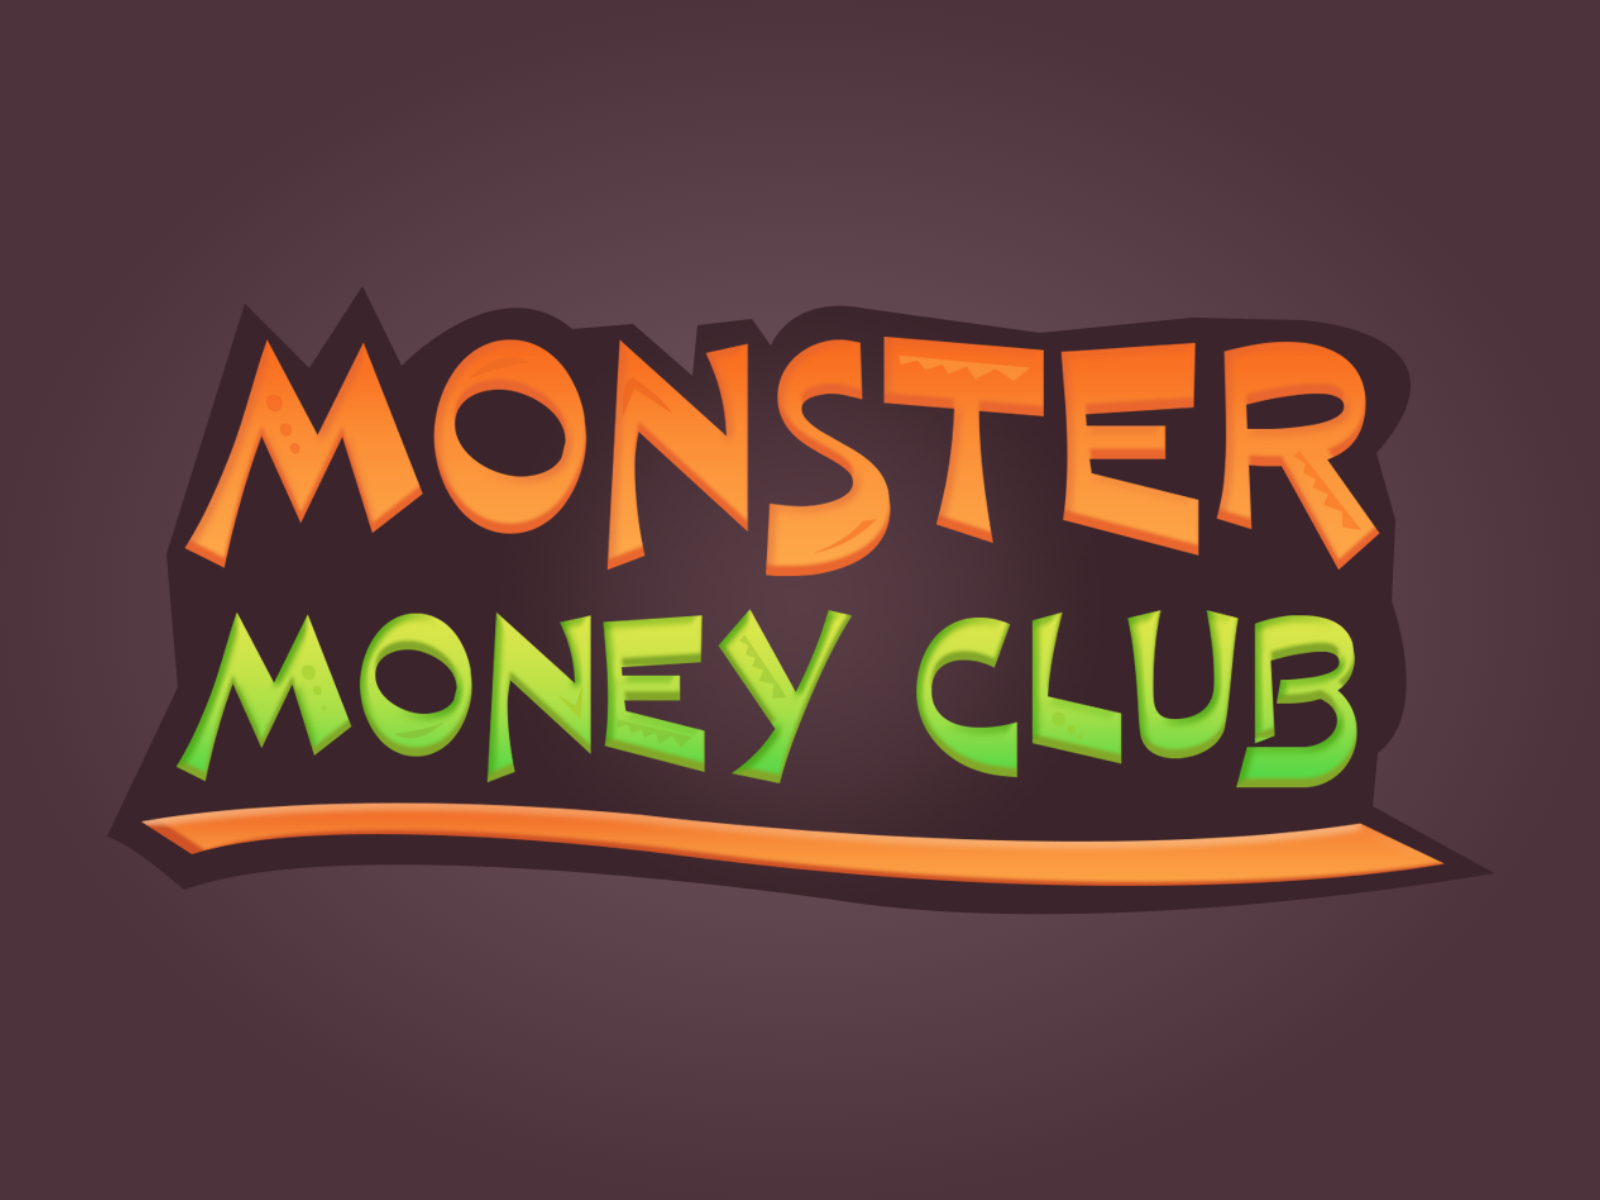 monster-money-club-by-arslan-arshad-on-dribbble